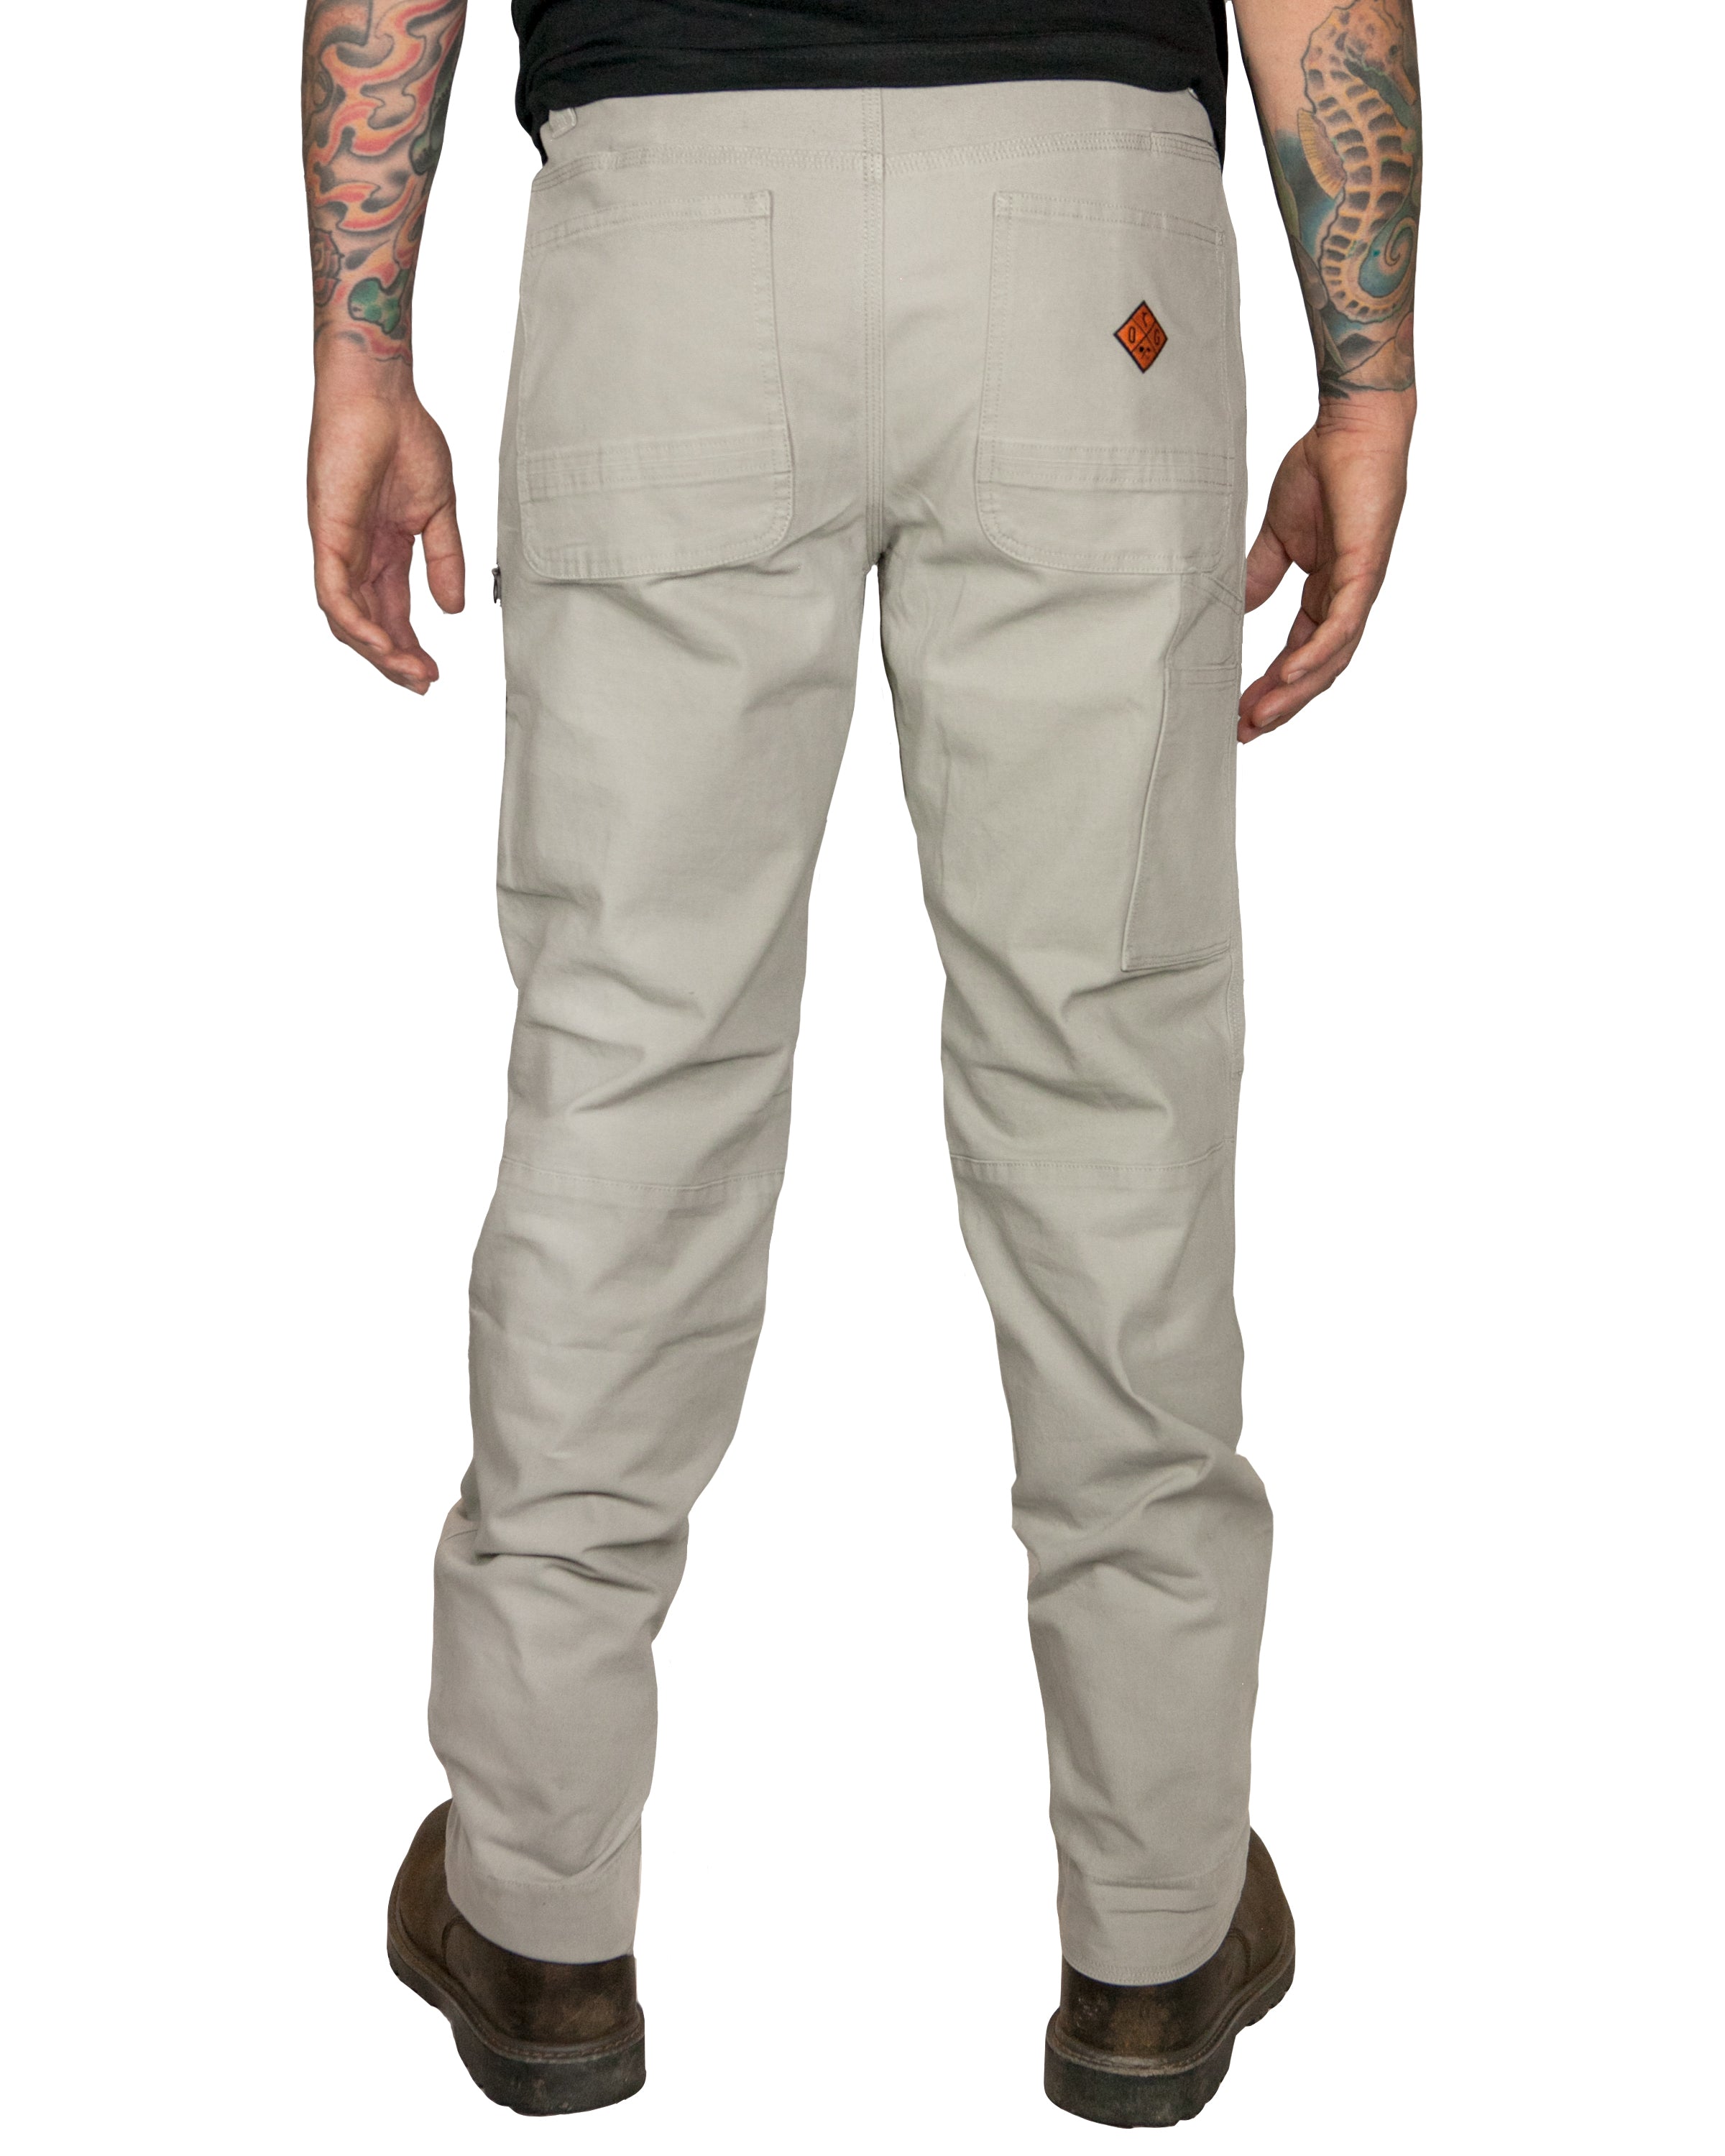 Trailblazer 5.1 Pants - Flint Grey - Standard Fit